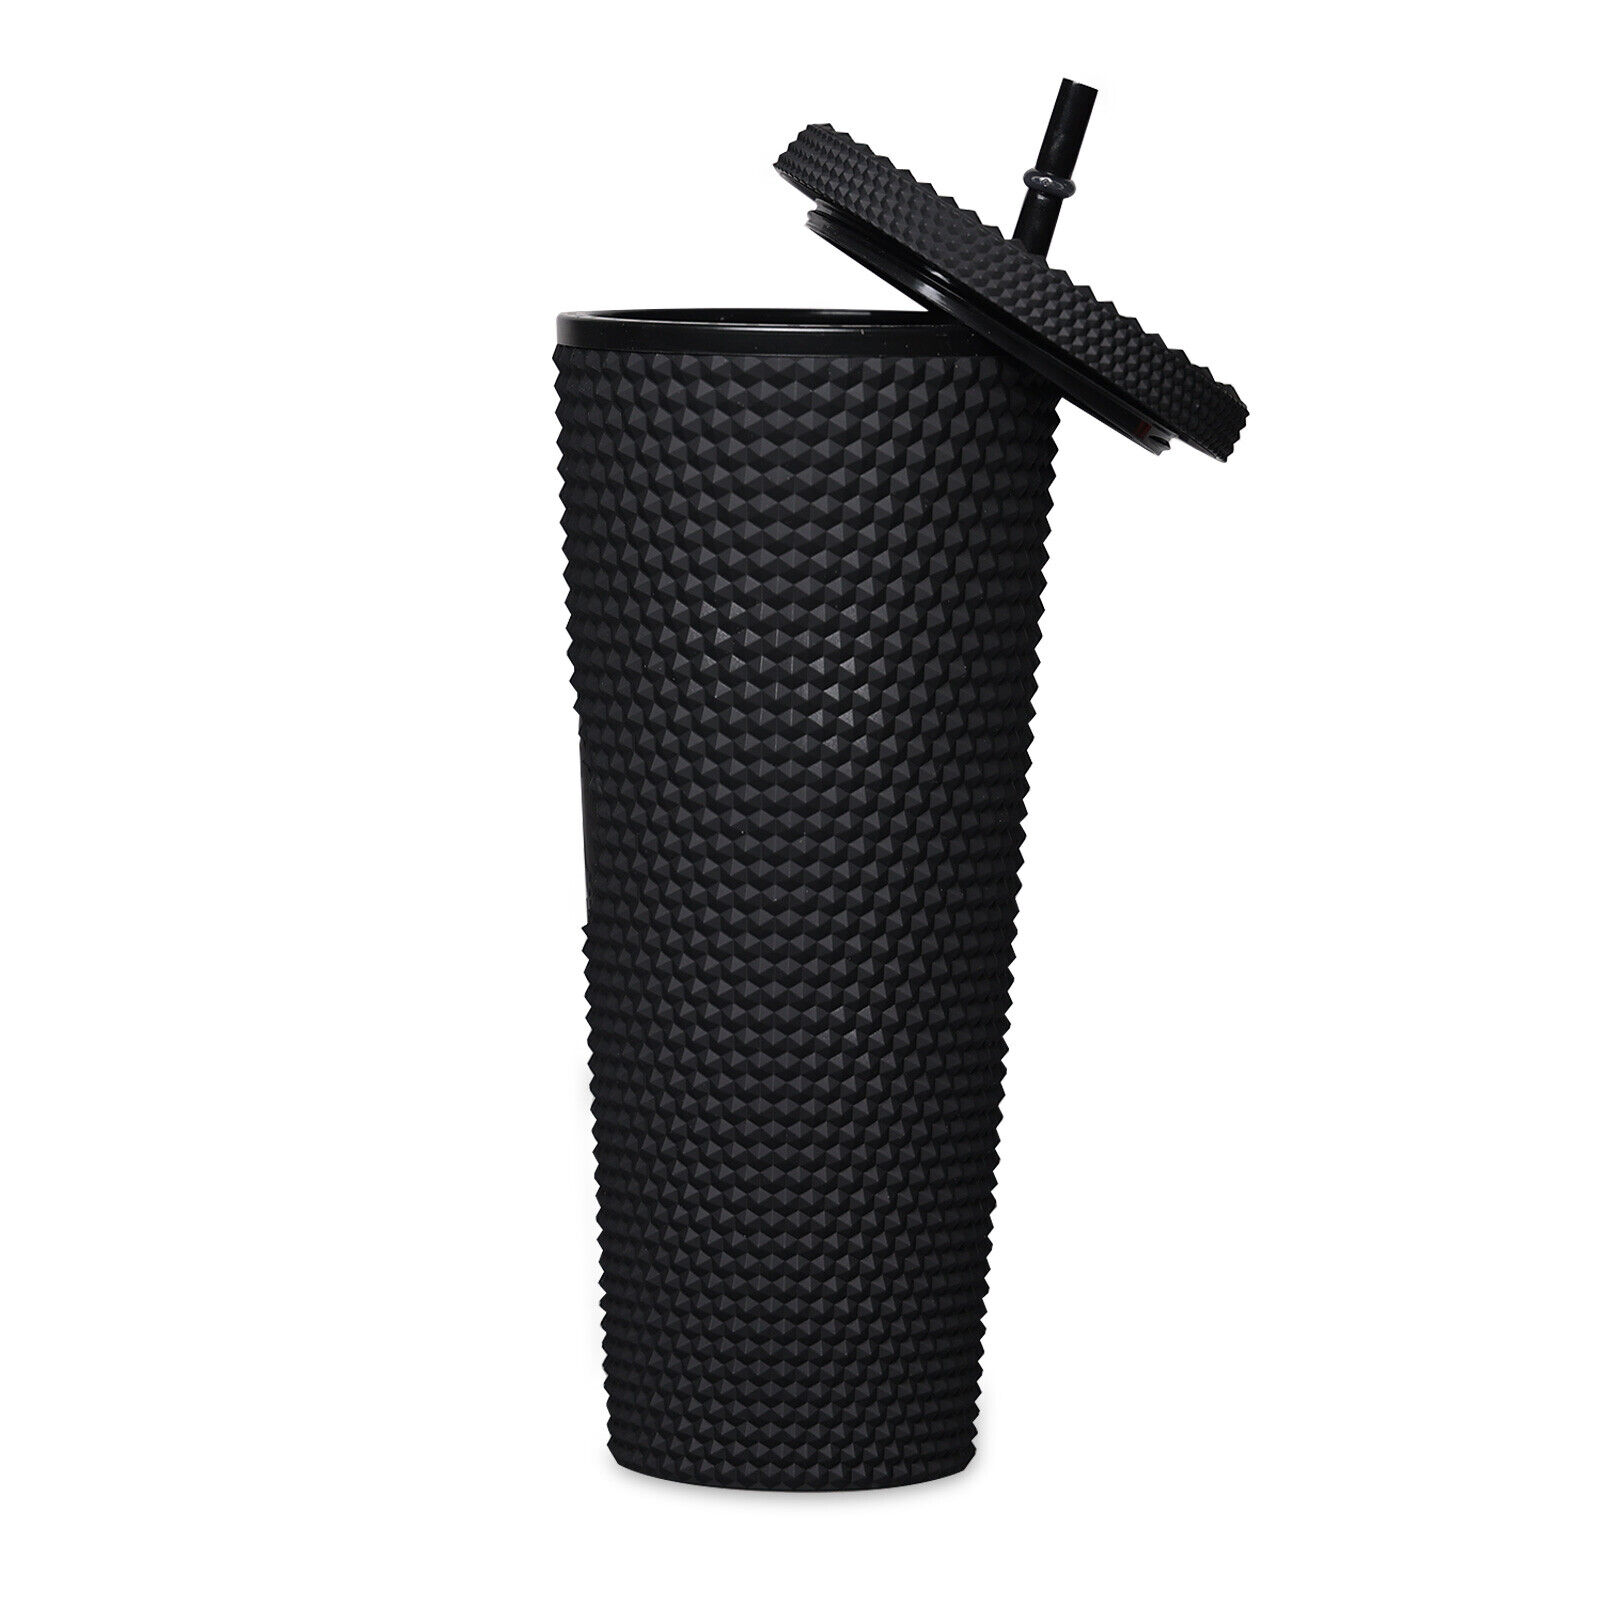 Matte Black-2022 Starbucks Studded Tumbler Plastic Cold Drink Cup Mug 24oz 710ml